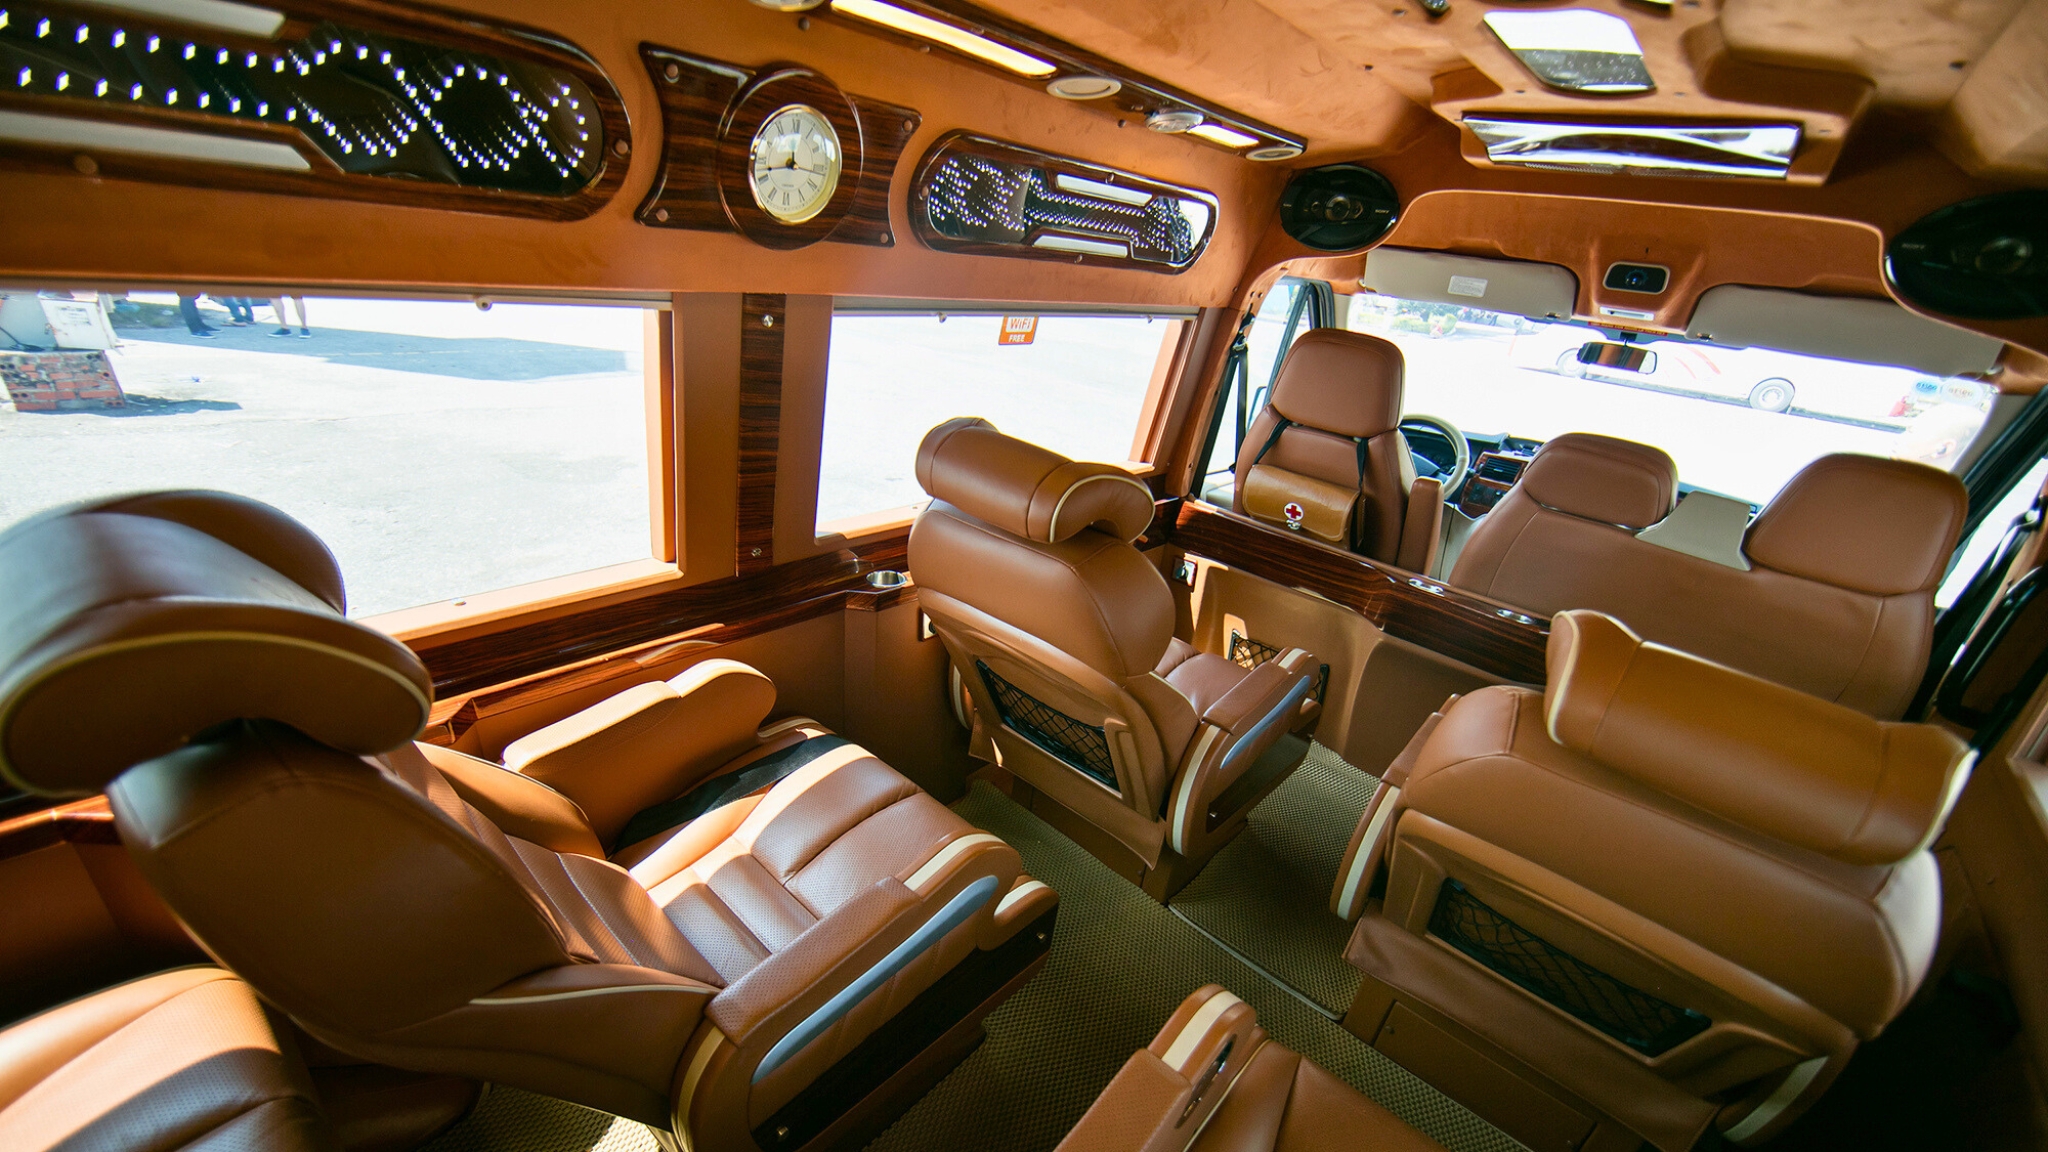 Luxury Shuttle Bus Is Better Than Standard Ones In Many Factors